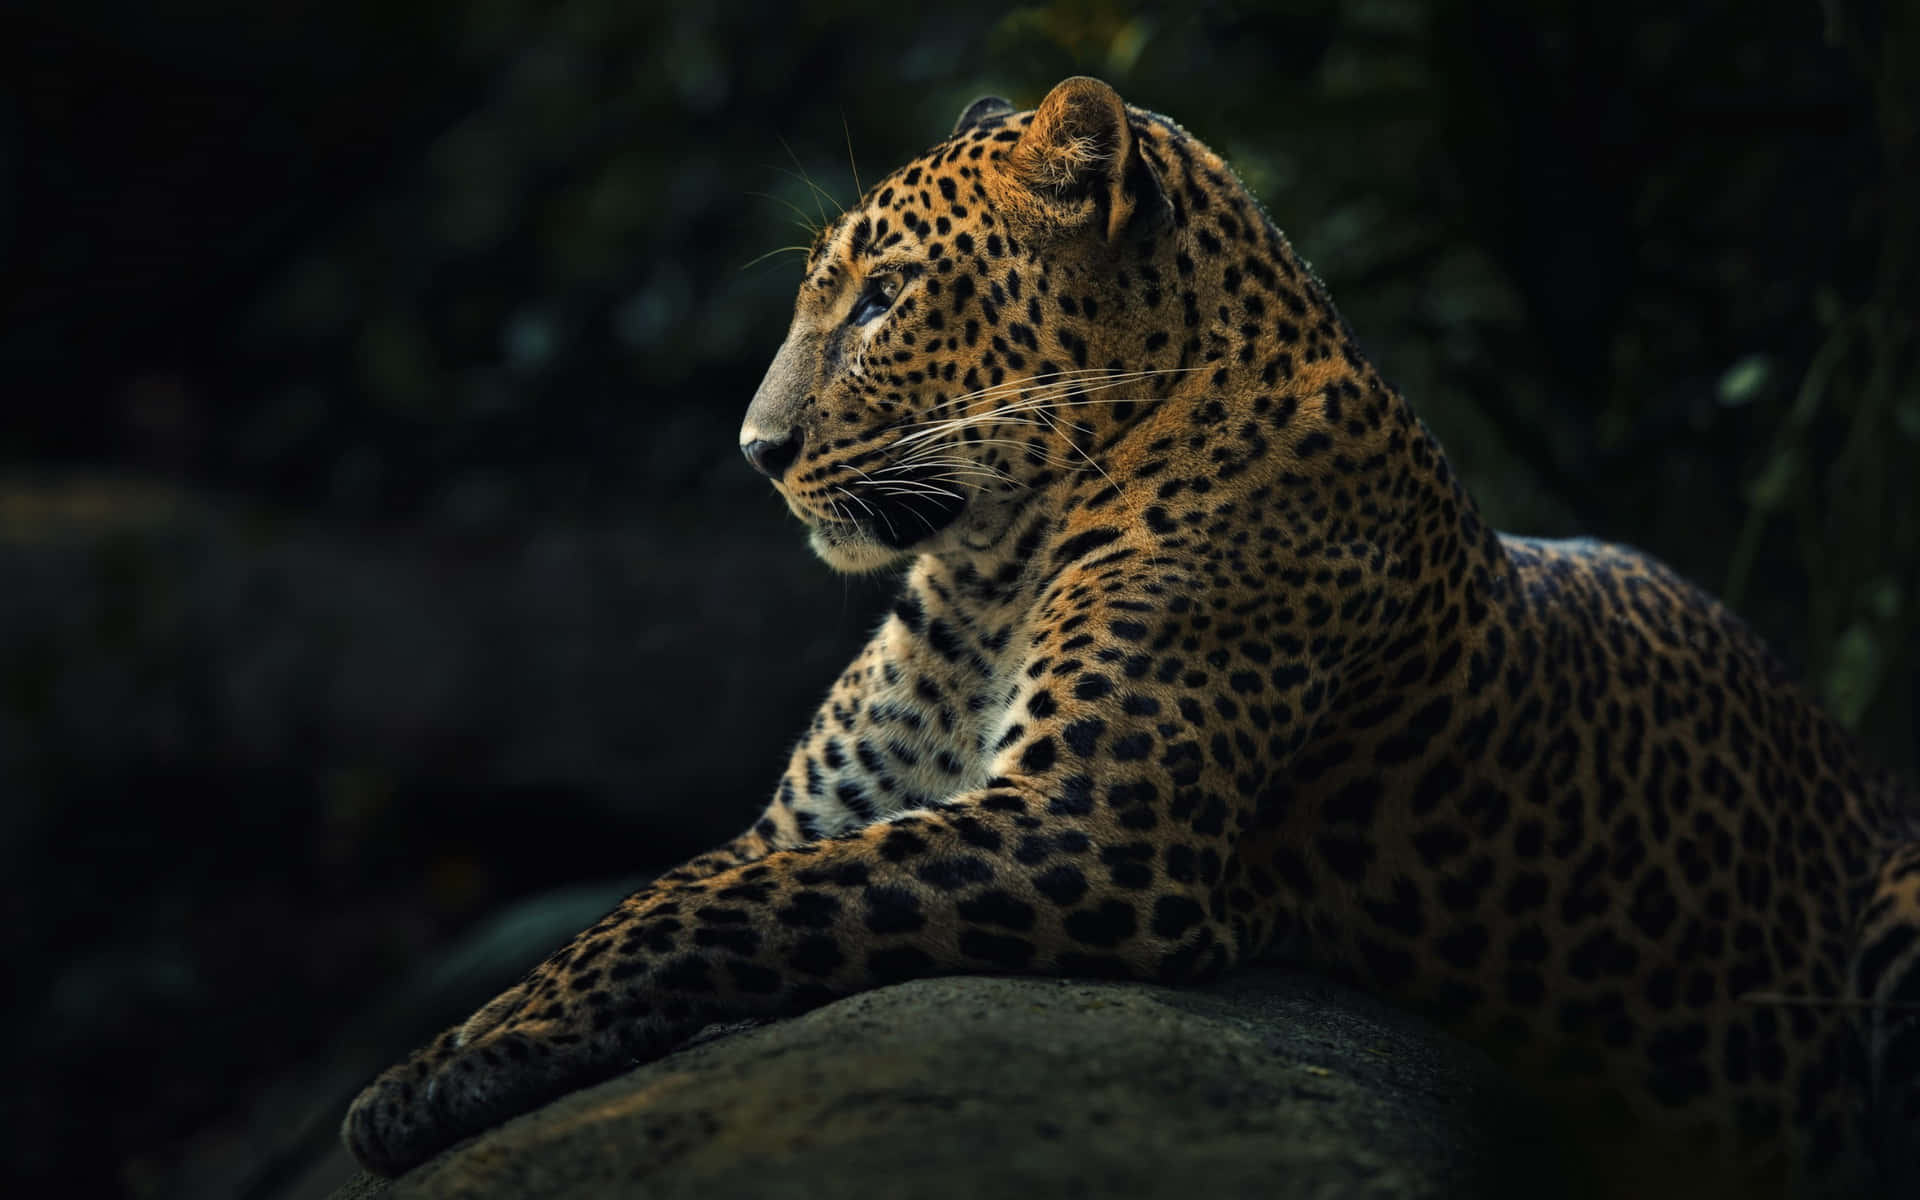 “Adventurous Leopard”